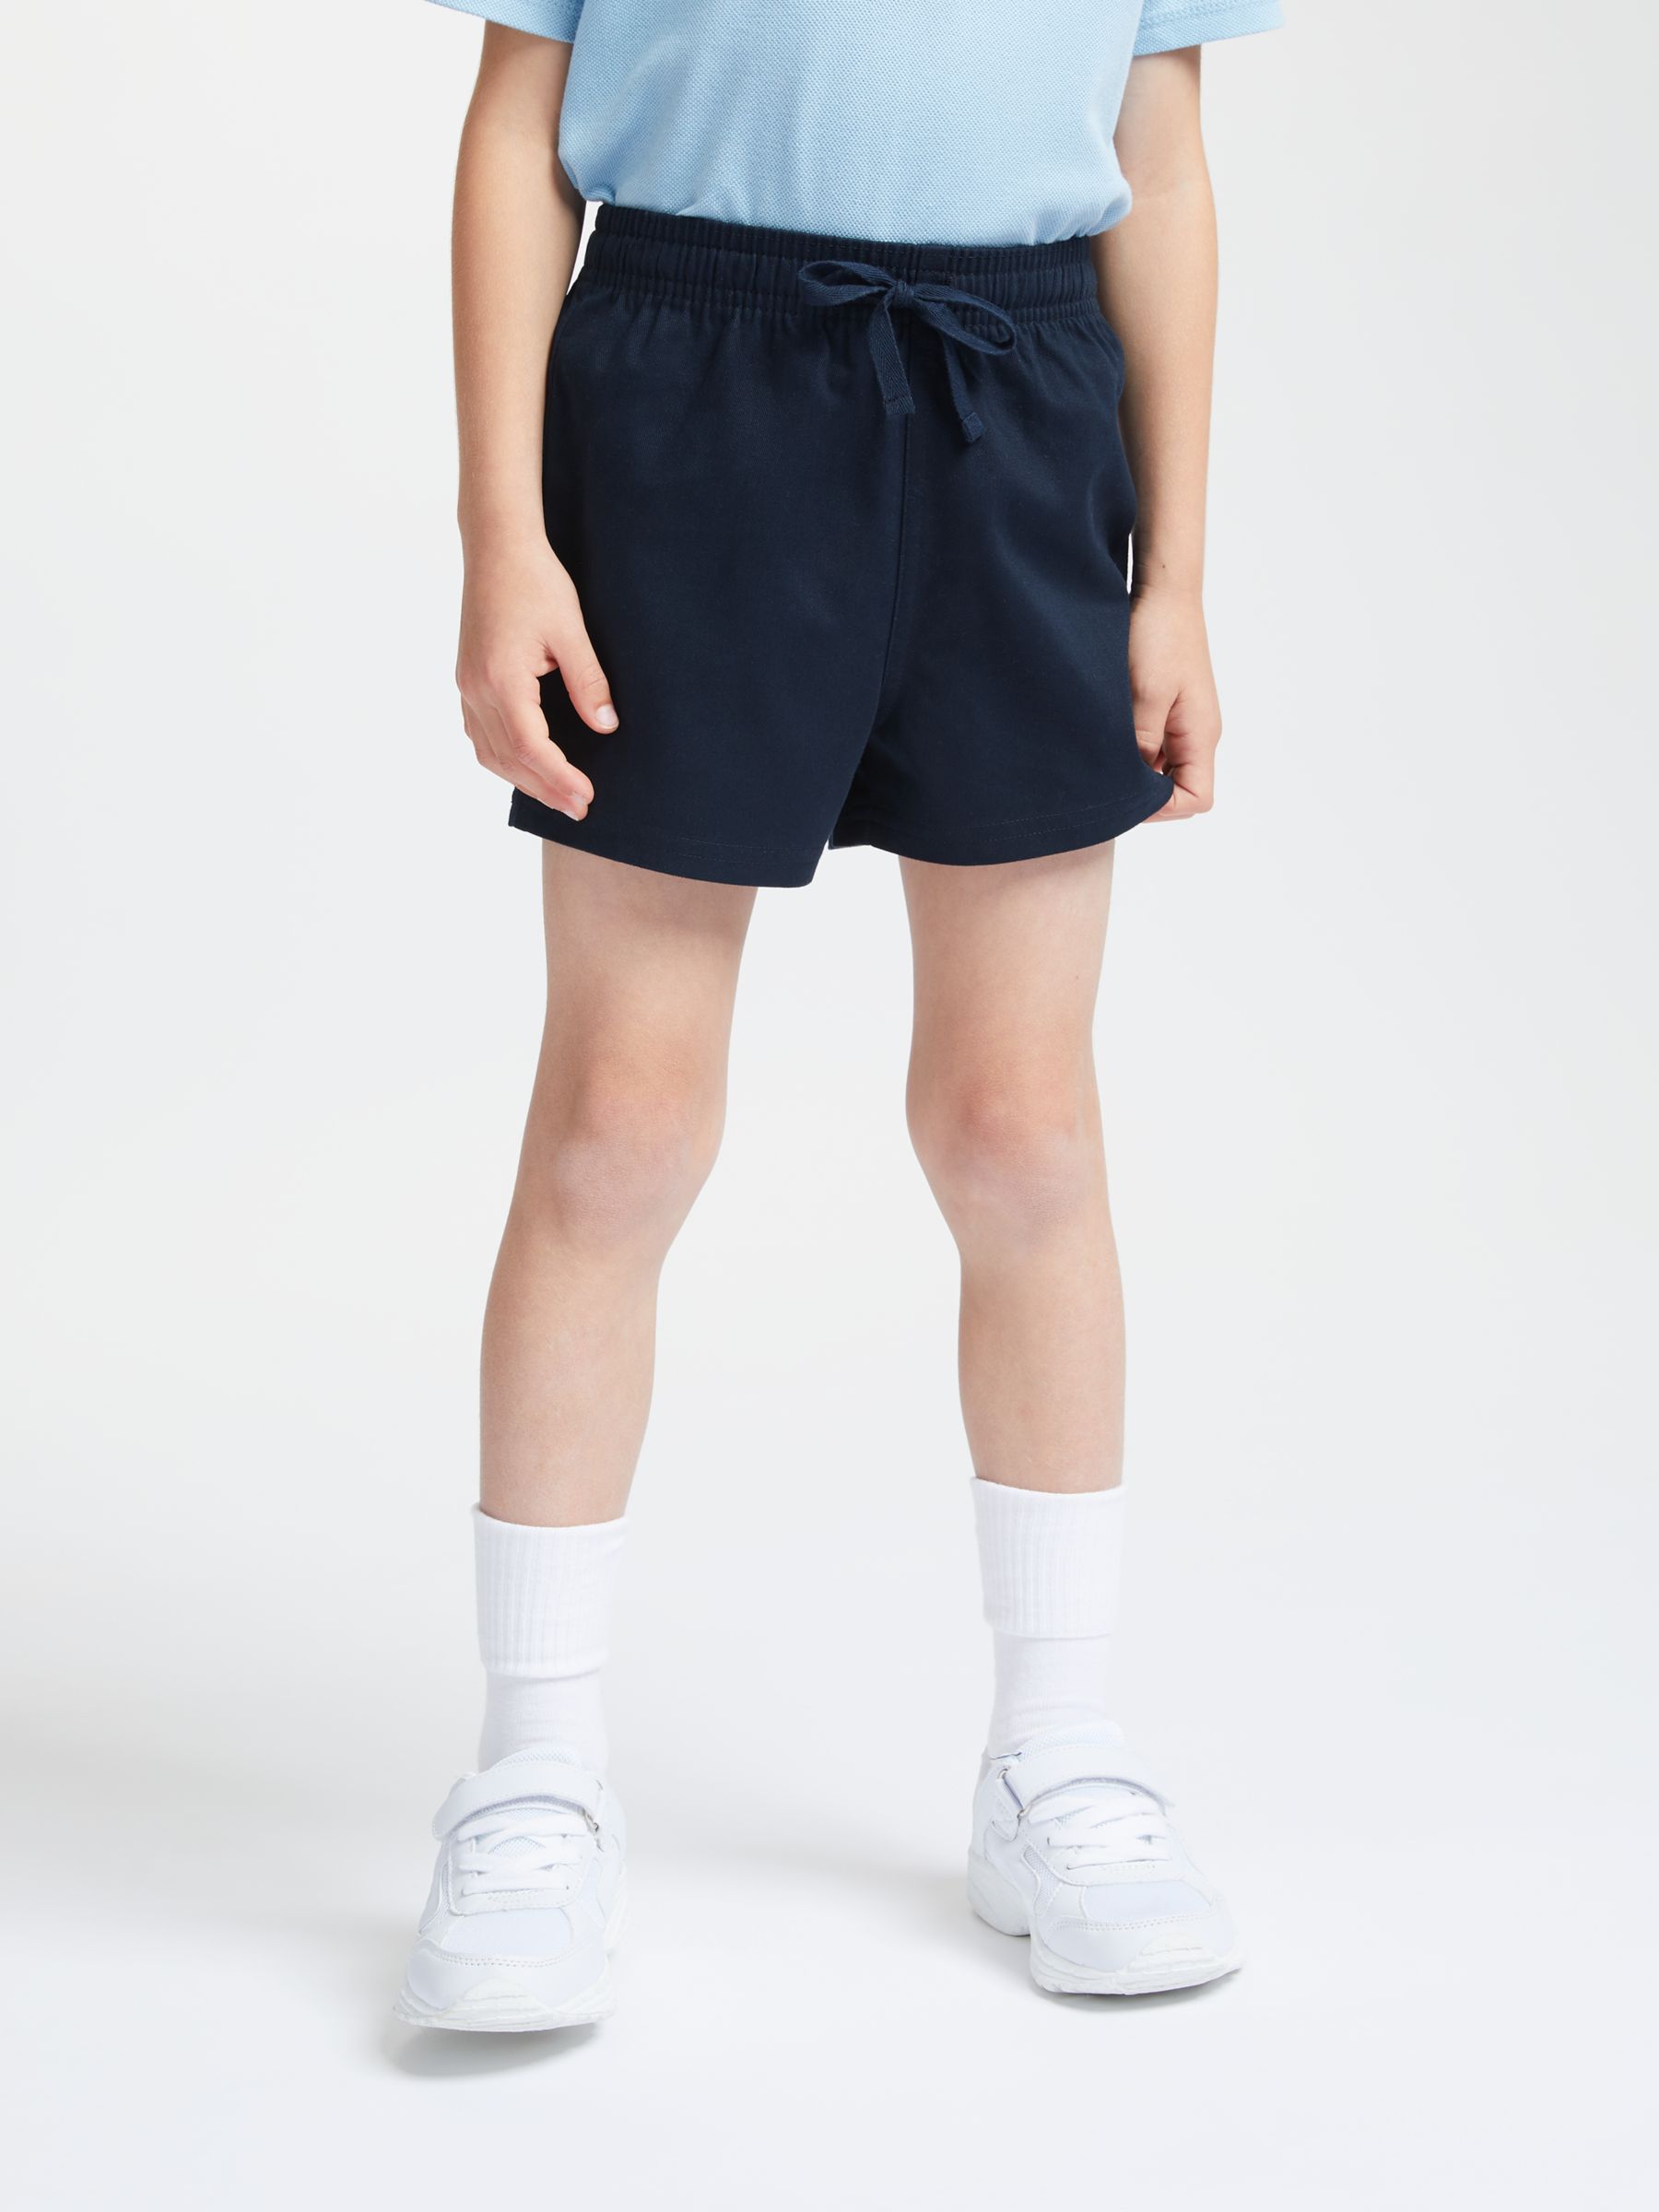 John Lewis Children's Cotton School PE Shorts, Navy, 4-5 years